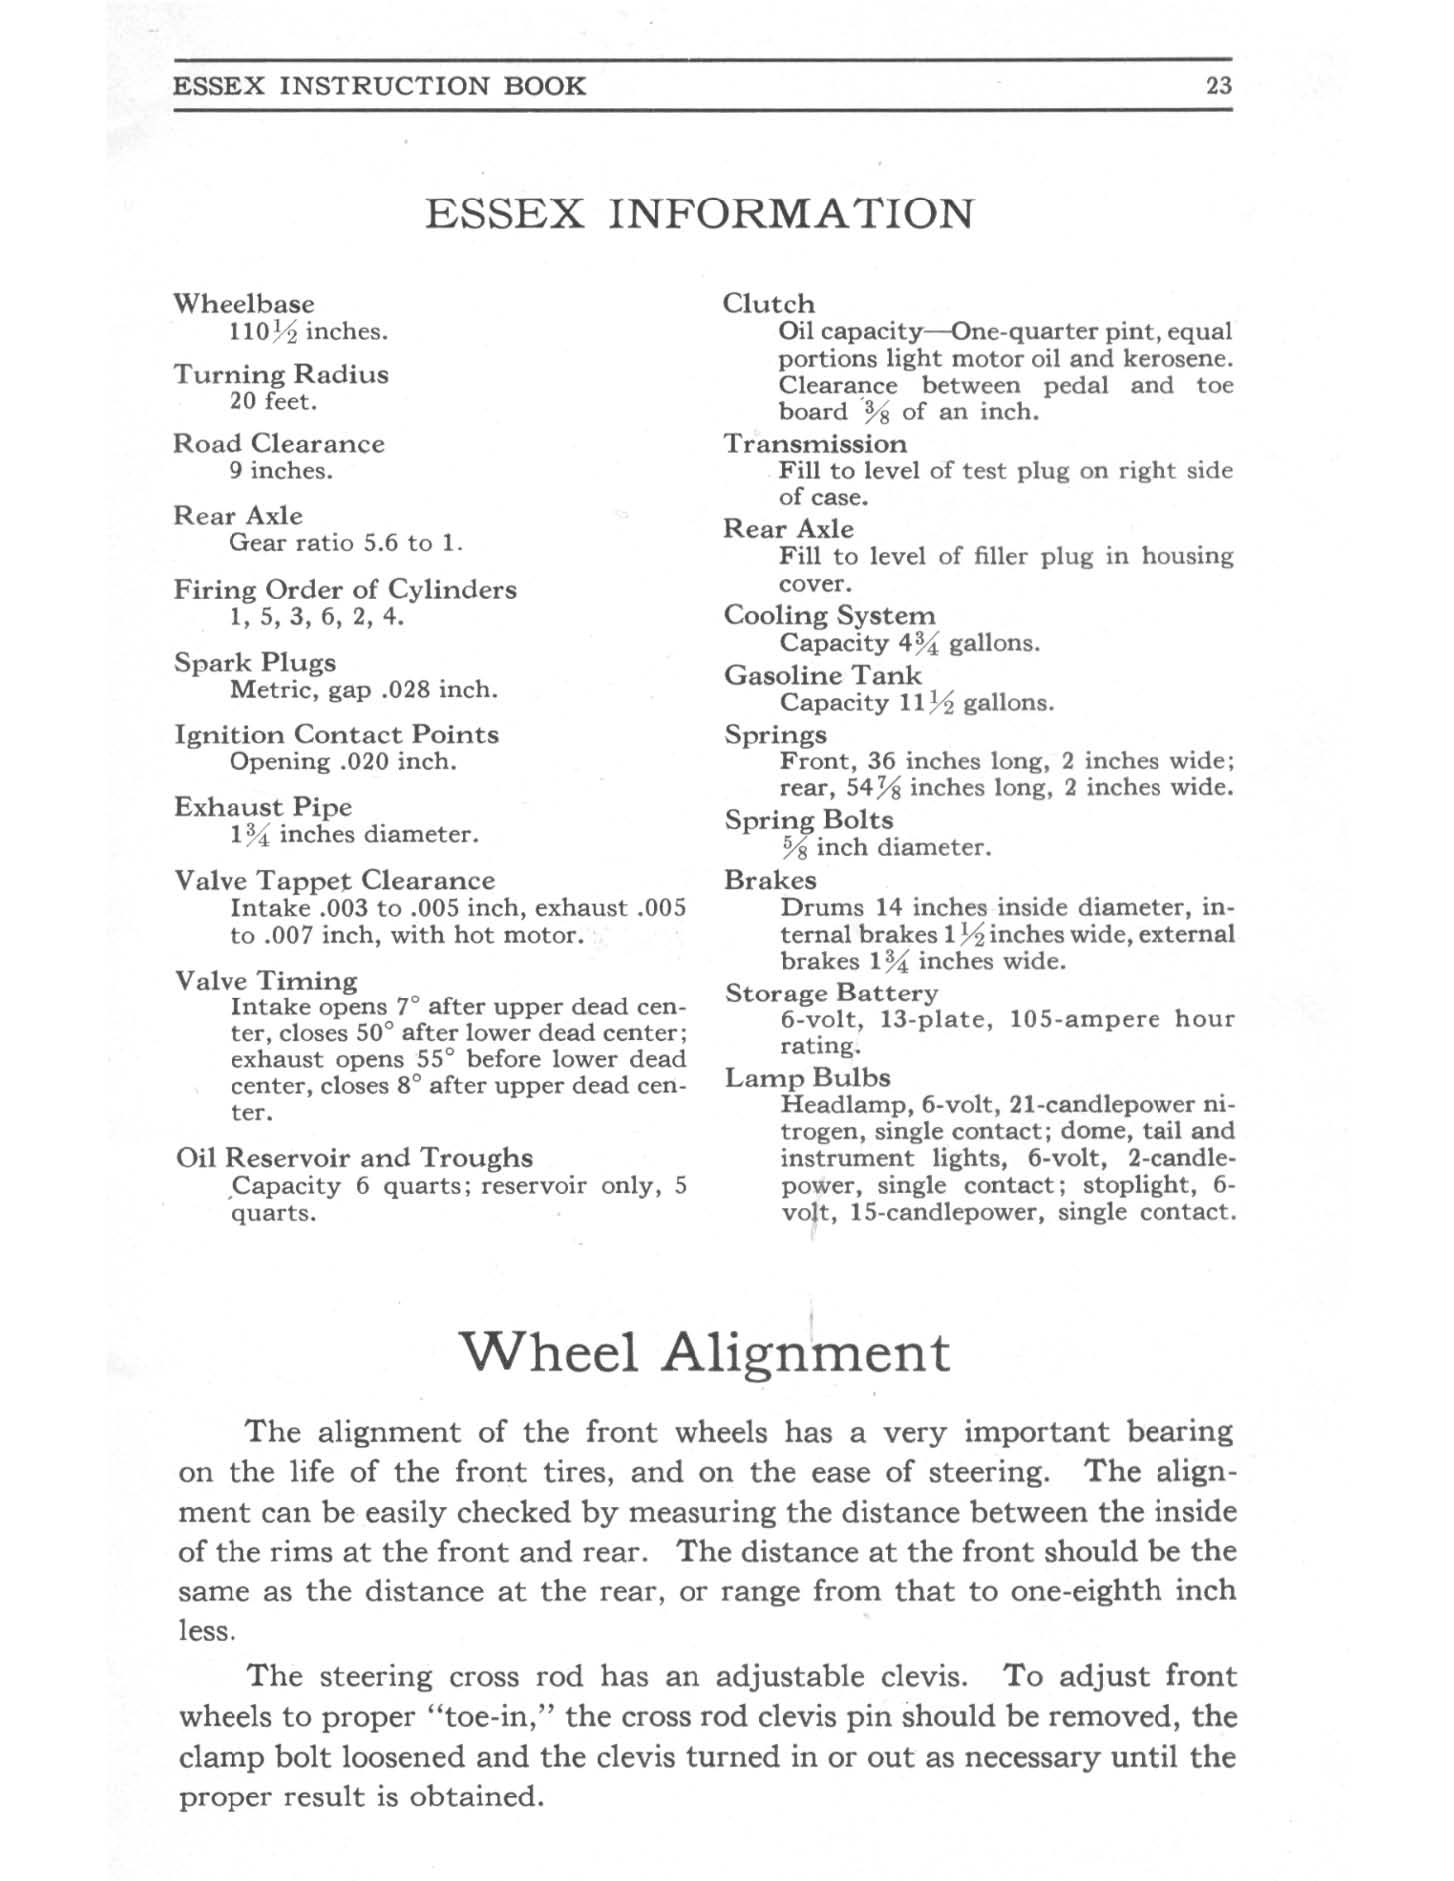 1927 Essex Instruction Book-24